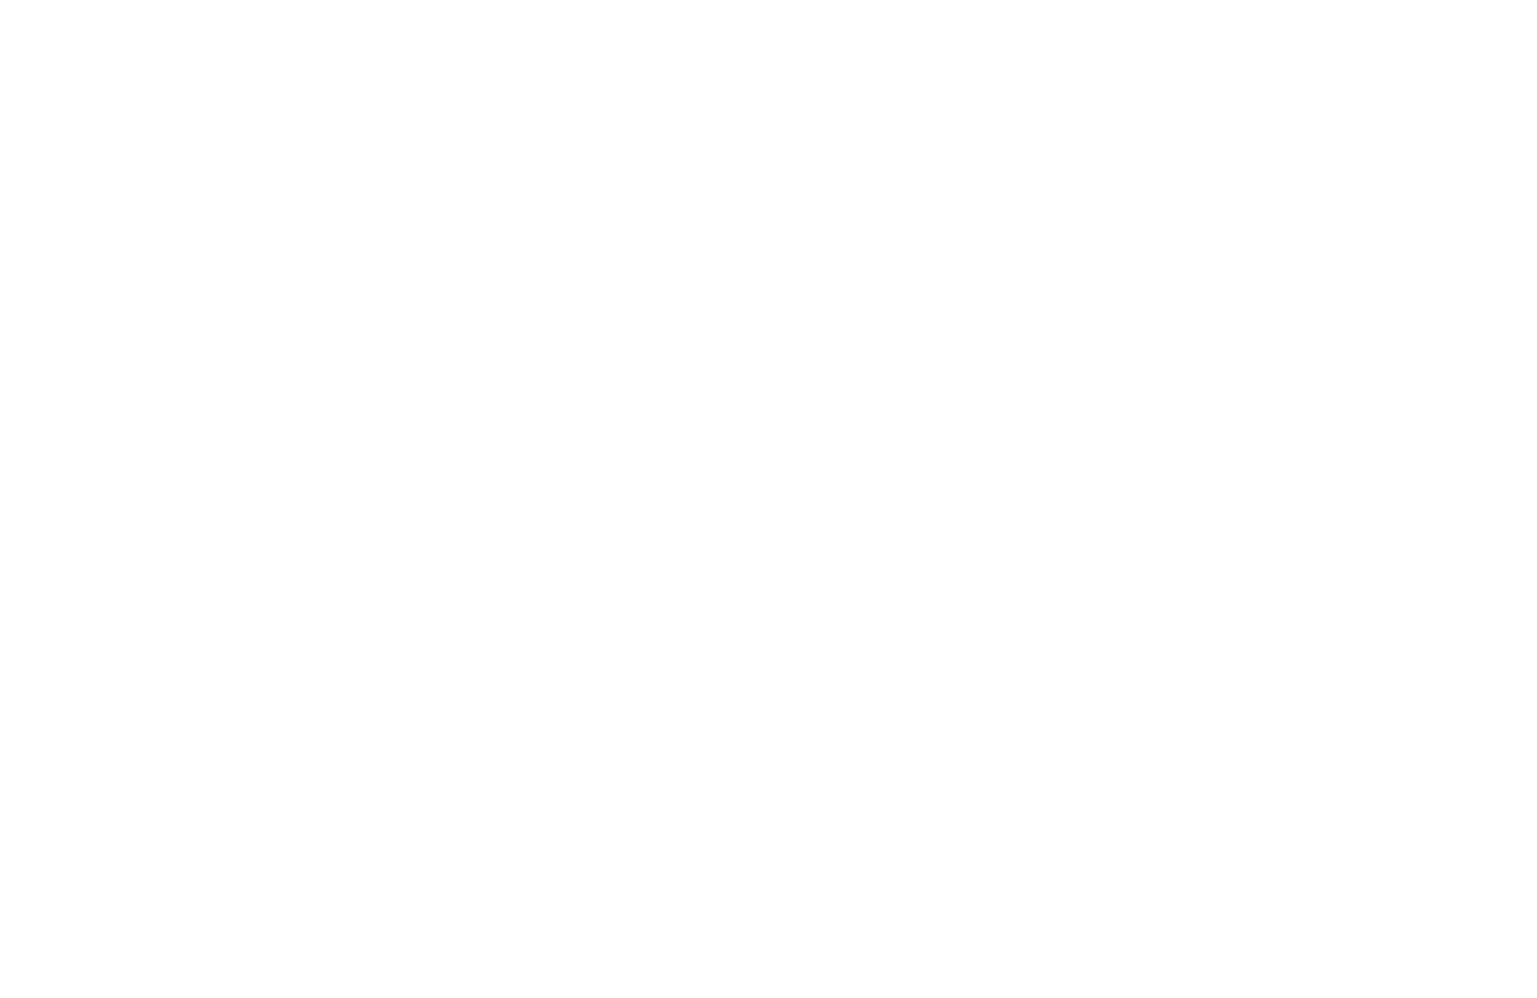 Akatsuki Corp. logo large for dark backgrounds (transparent PNG)